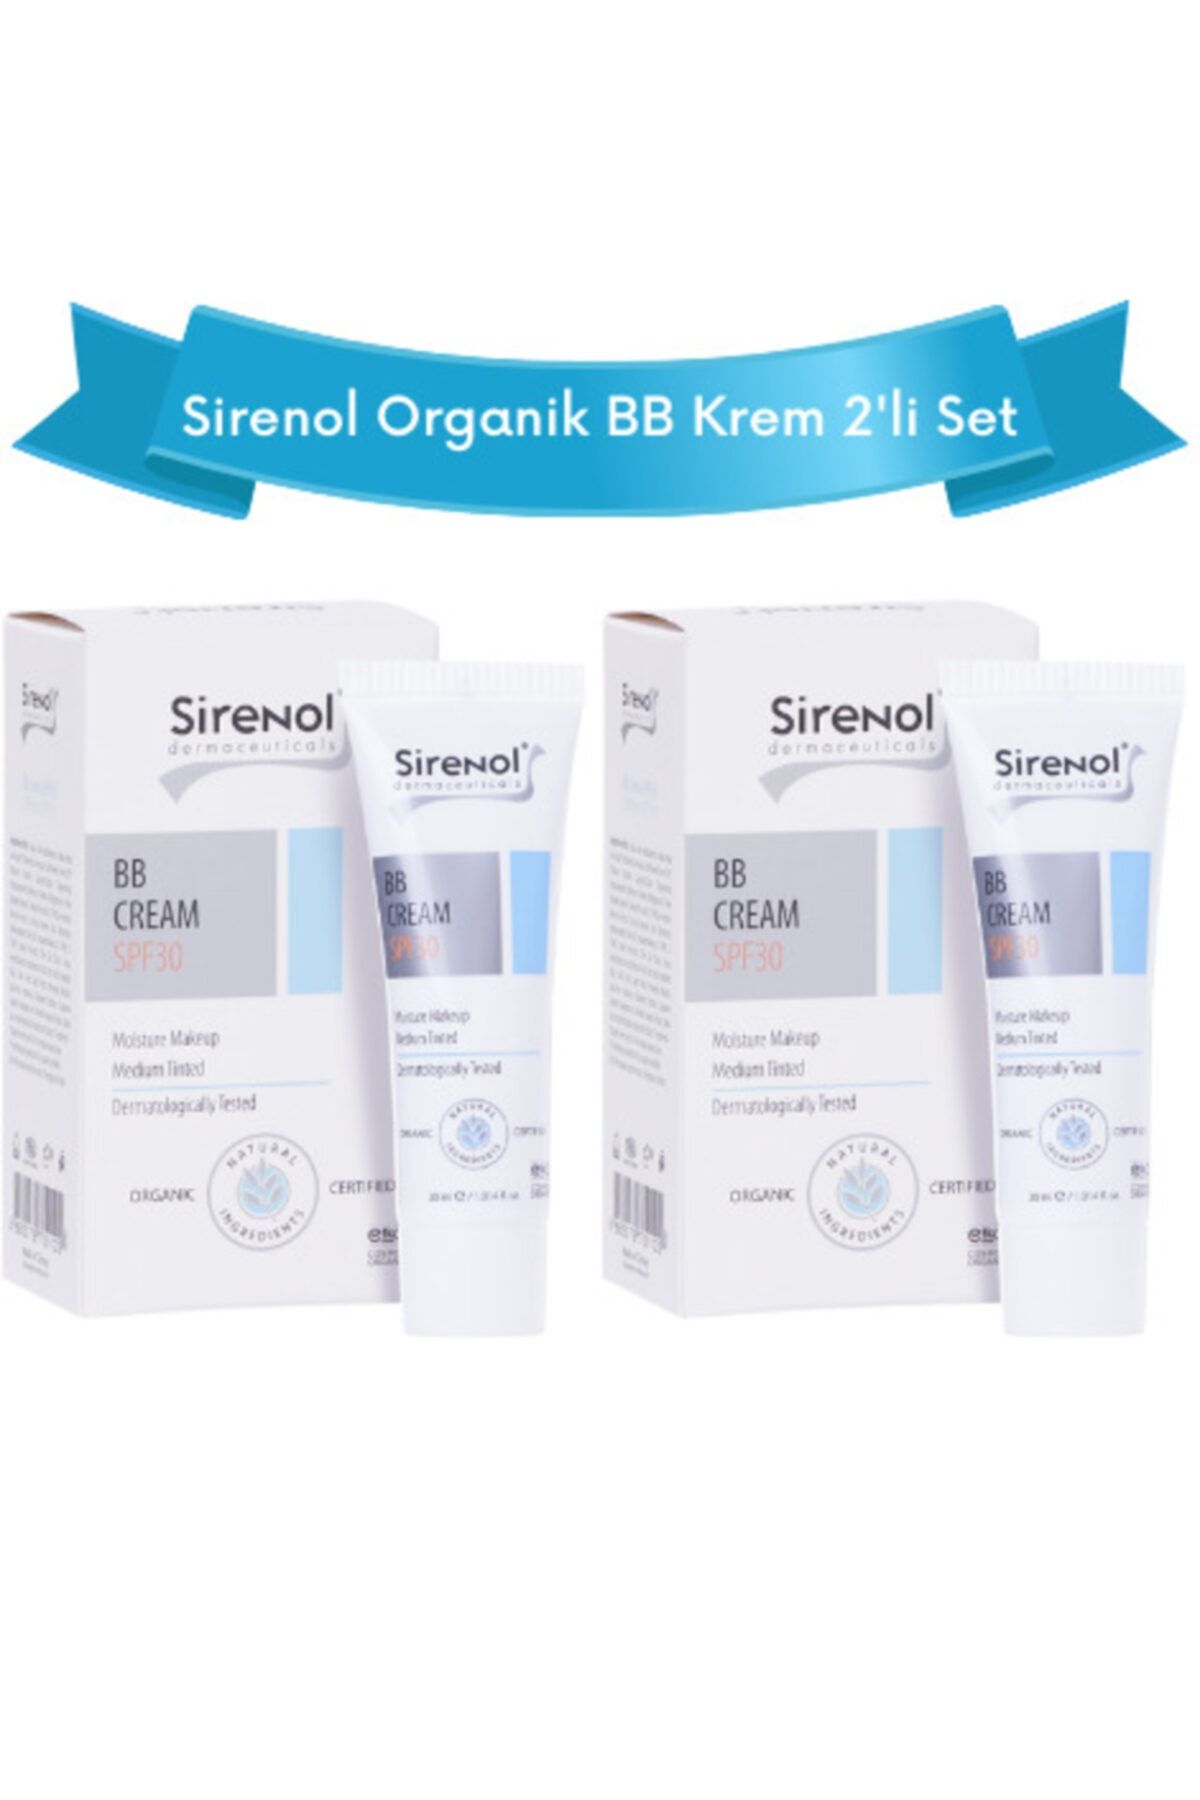 Sirenol Organik Bb Krem 2'li Set